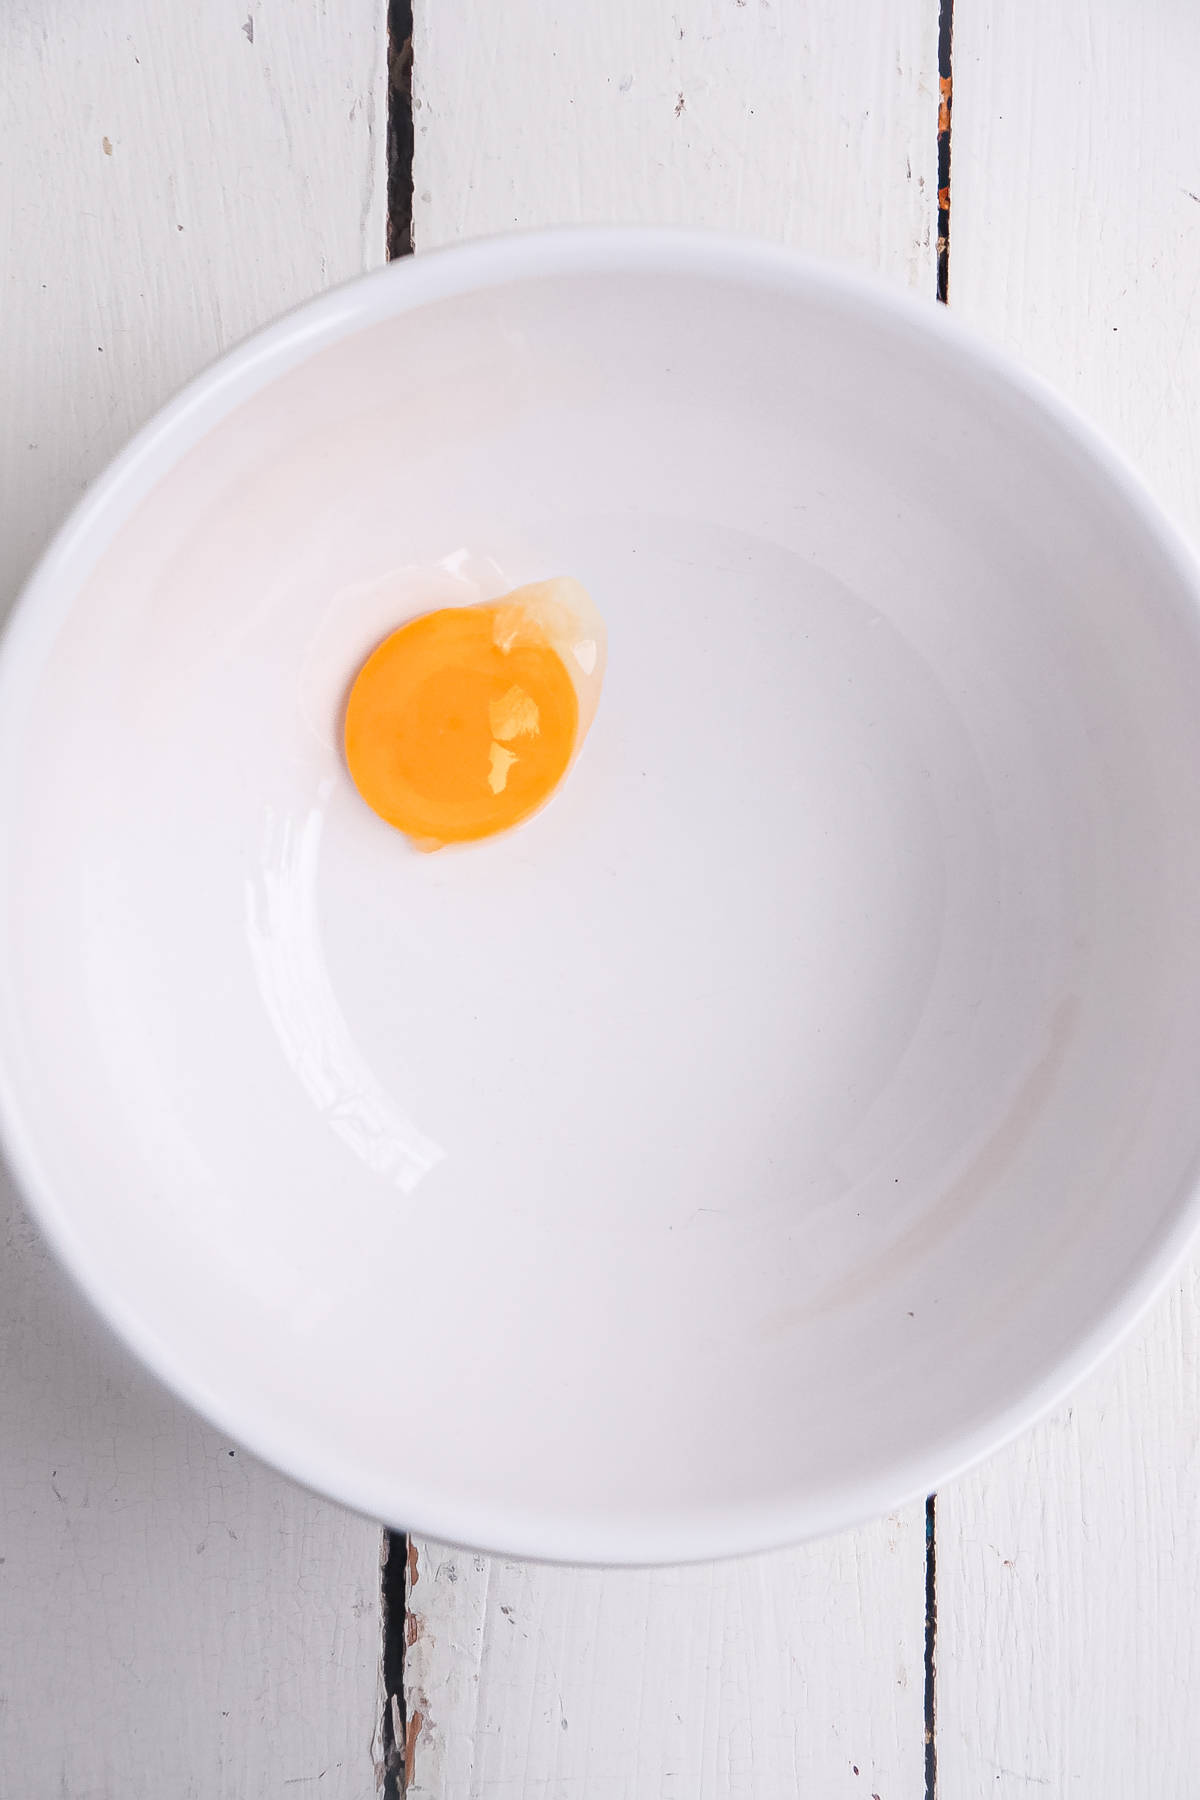 one egg yolk in a white bowl.